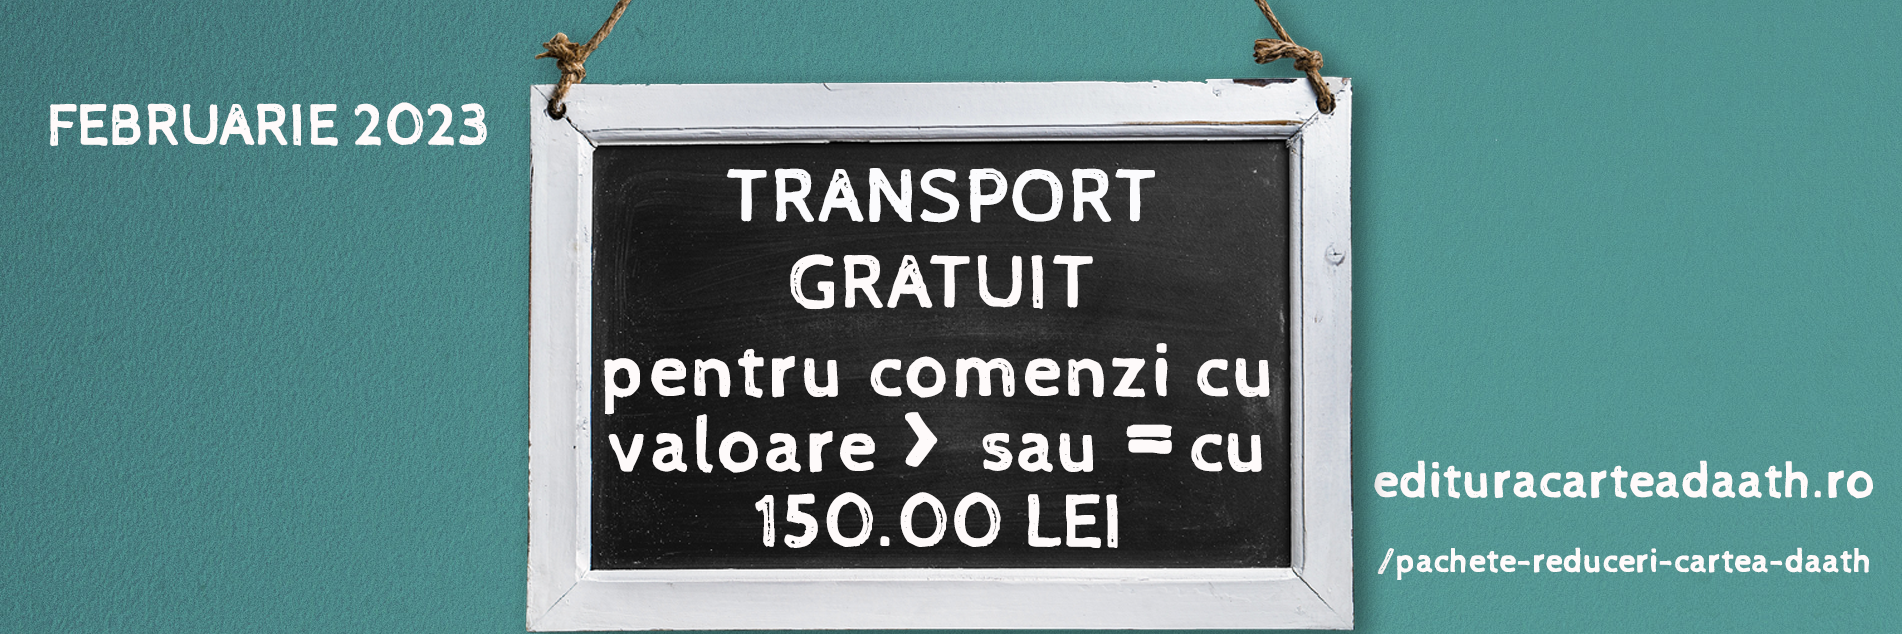 TRANSPORT GRATUIT